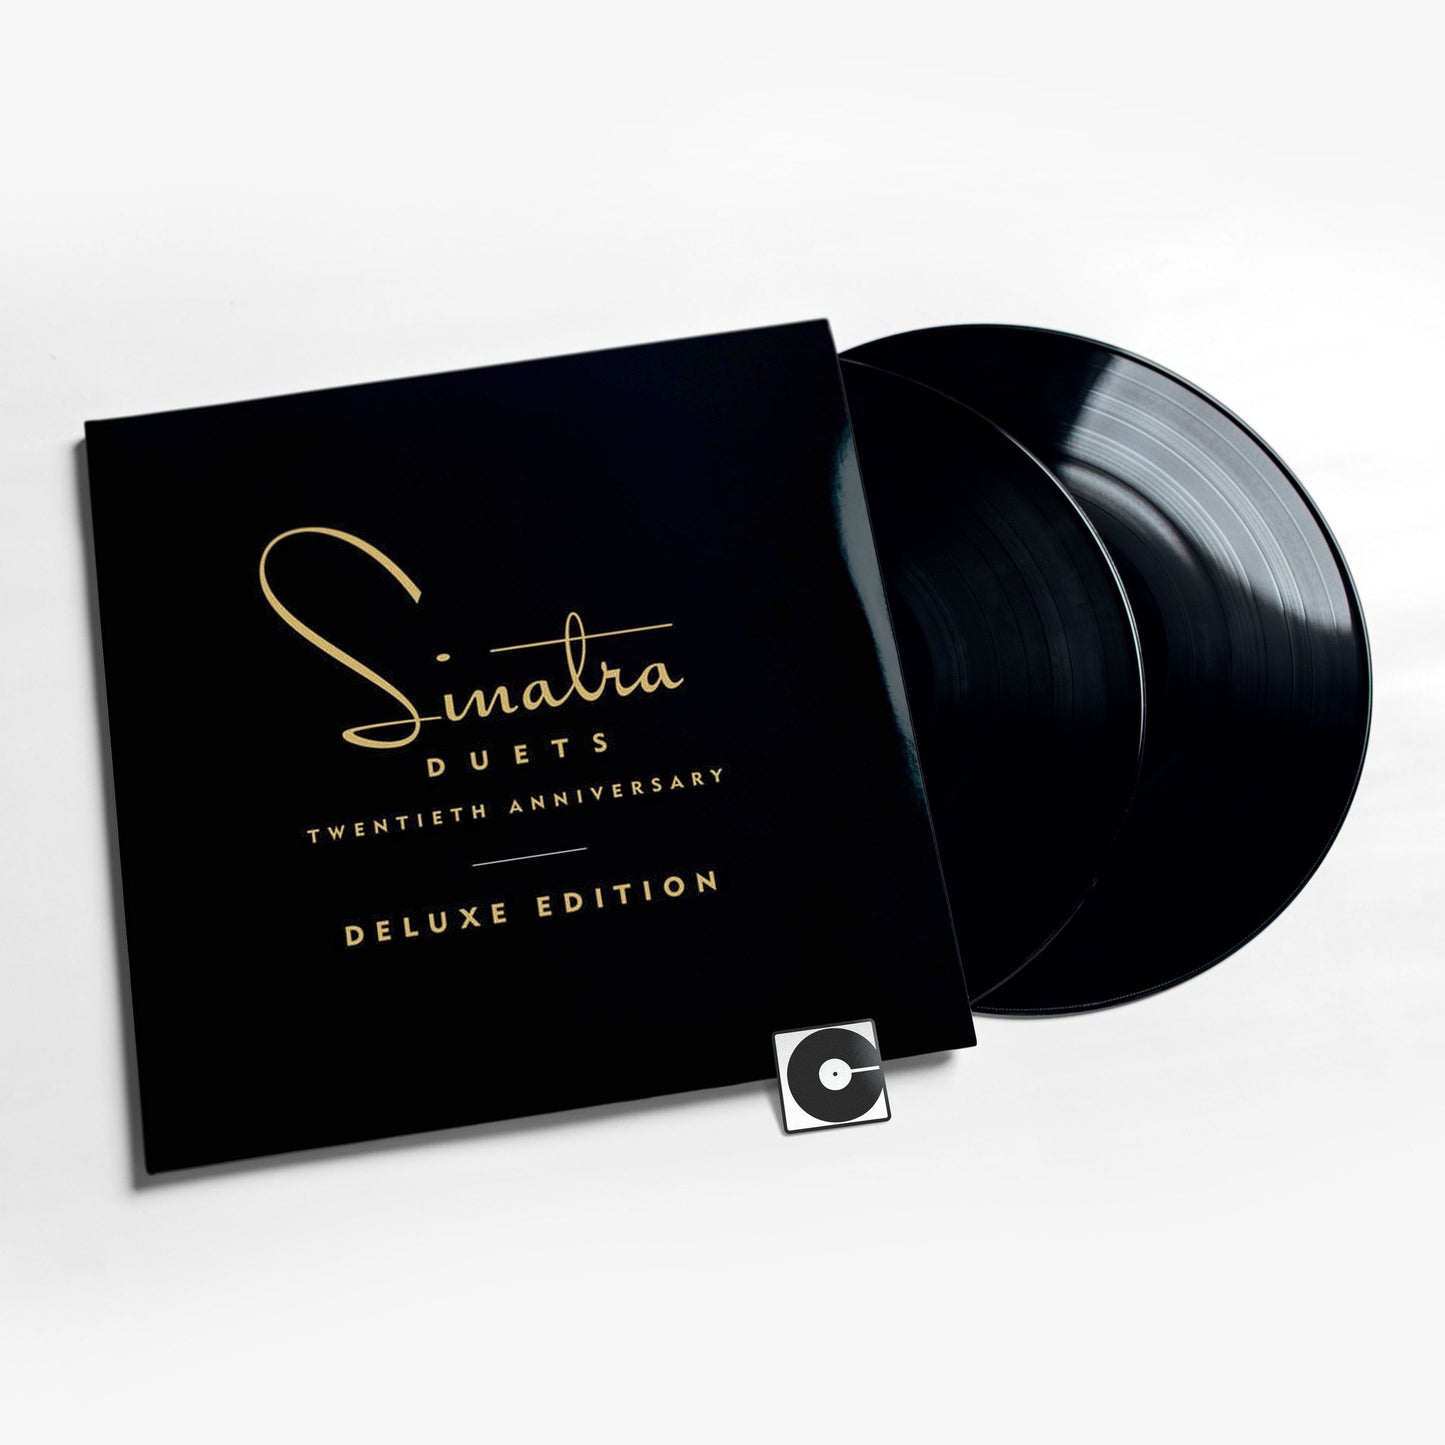 Frank Sinatra - "Duets"